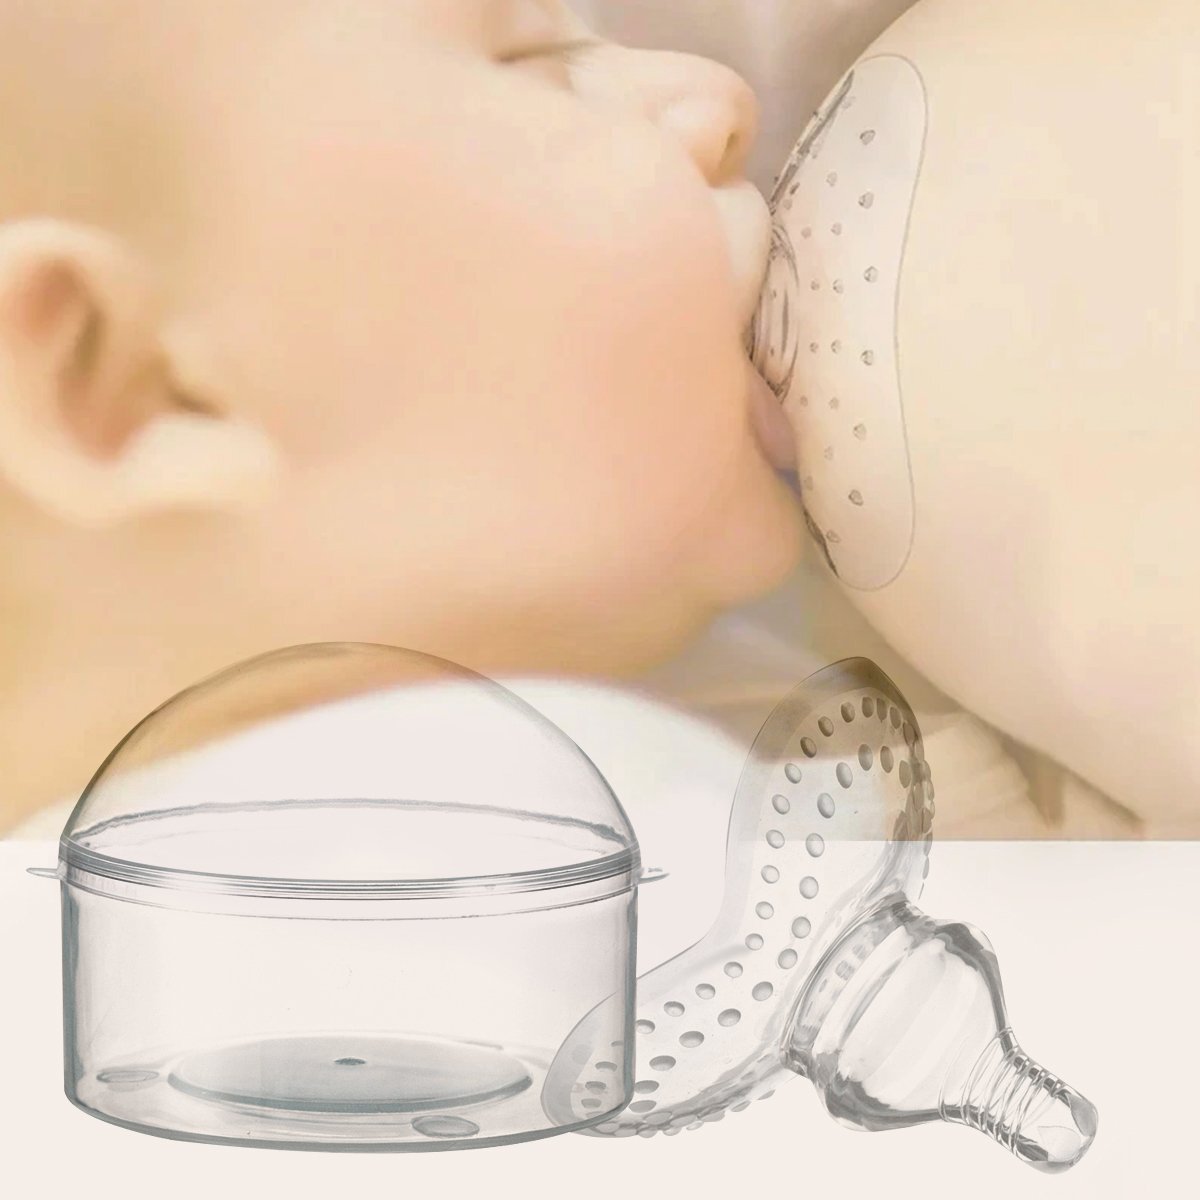 Best nipple shields for breastfeeding